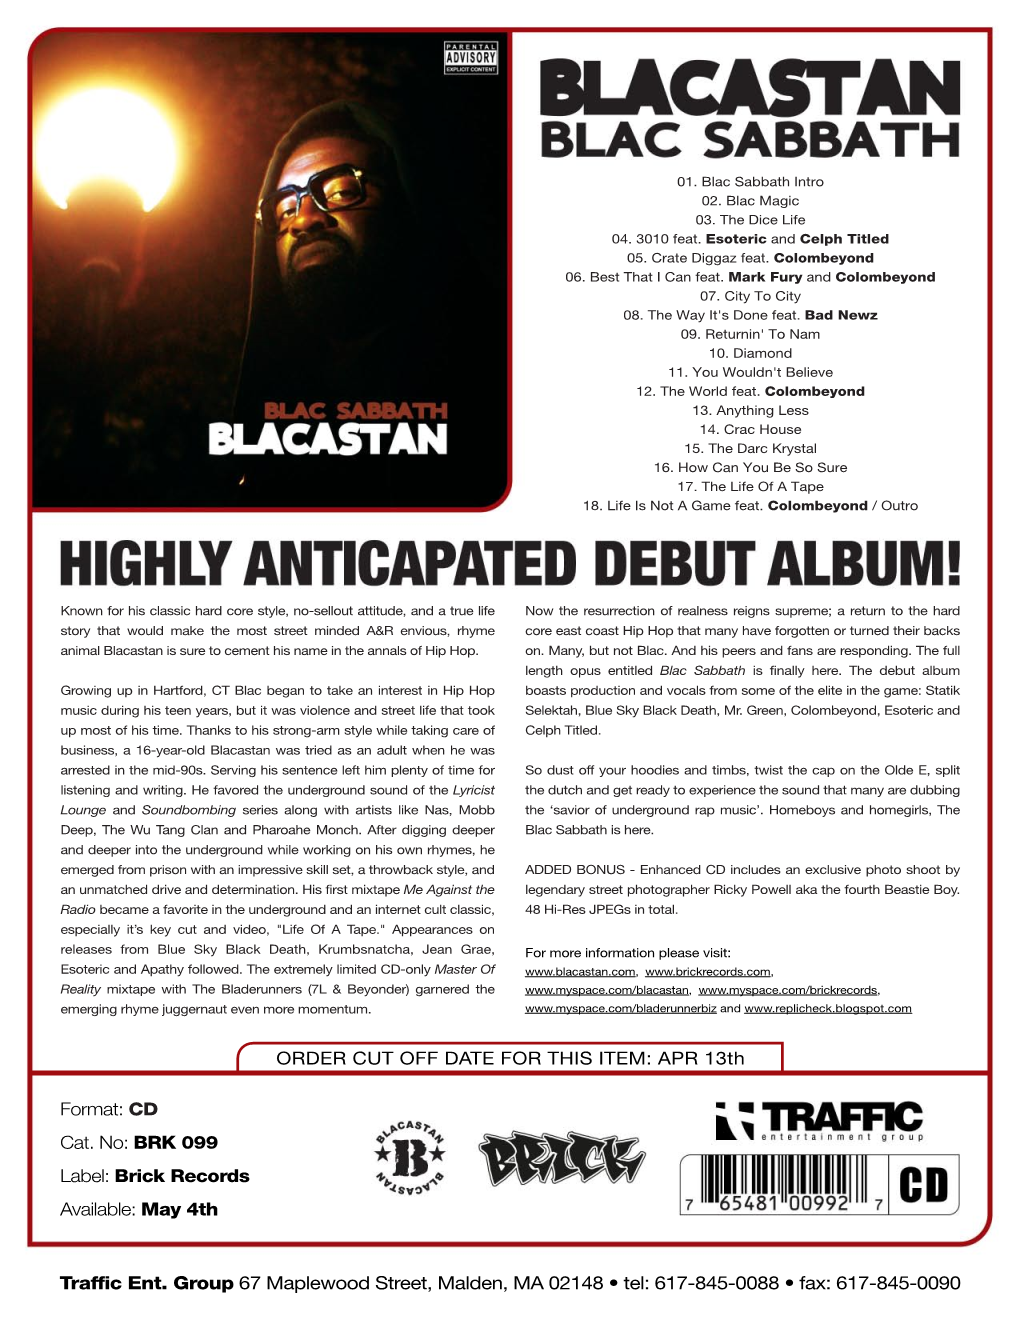 BRK 099 BLACASTAN Blac Sabbath CD